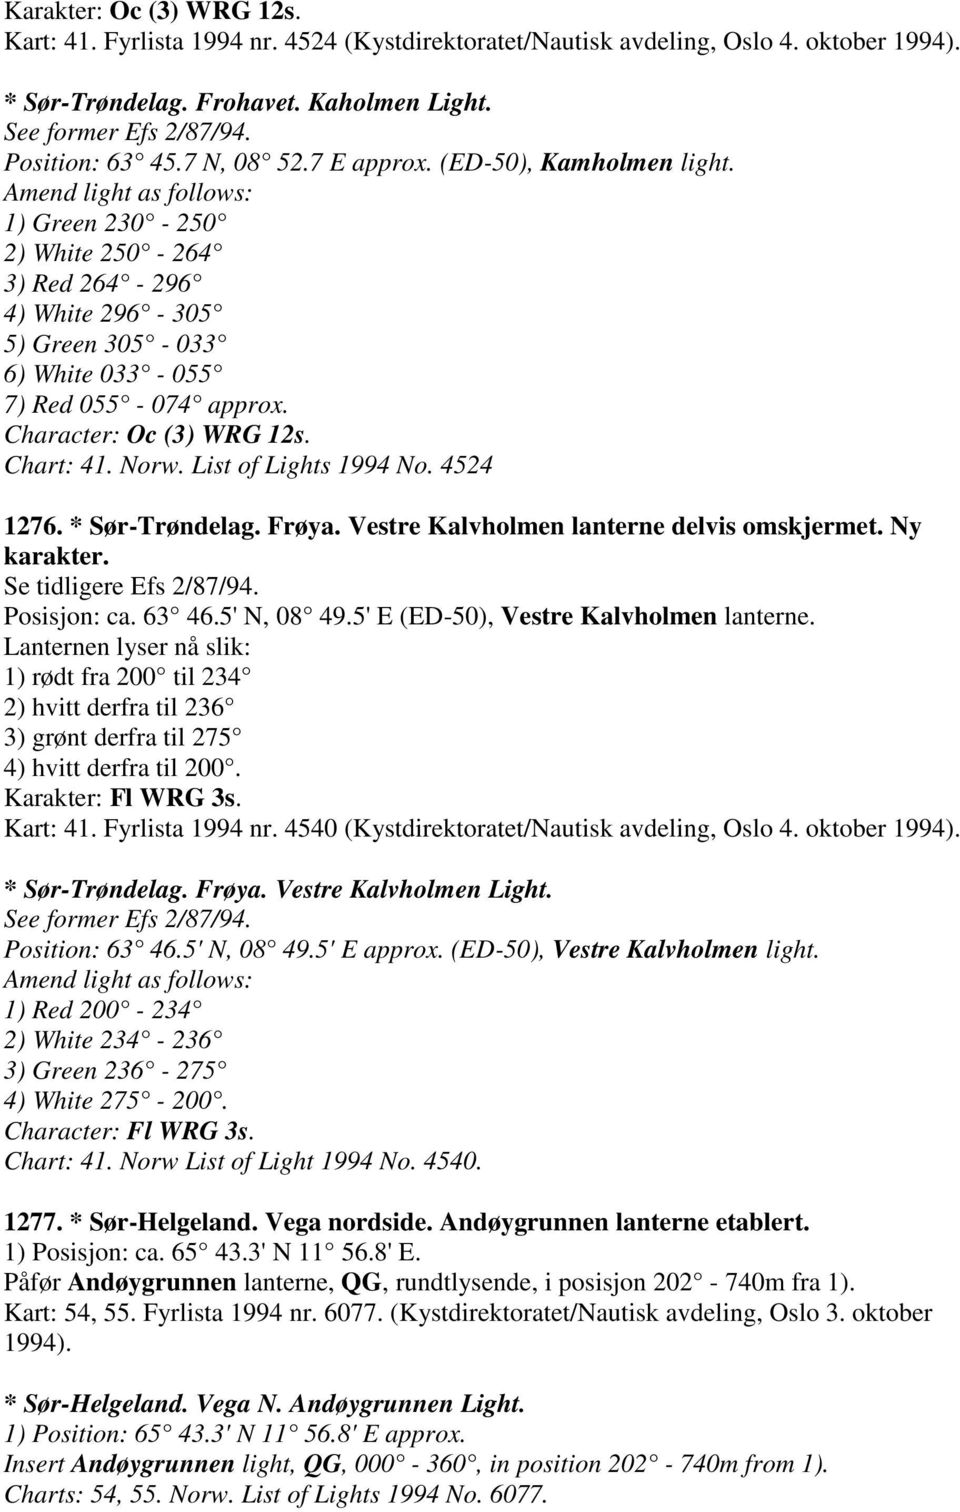 Character: Oc (3) WRG 12s. Chart: 41. Norw. List of Lights 1994 No. 4524 1276. * Sør-Trøndelag. Frøya. Vestre Kalvholmen lanterne delvis omskjermet. Ny karakter. Se tidligere Efs 2/87/94.